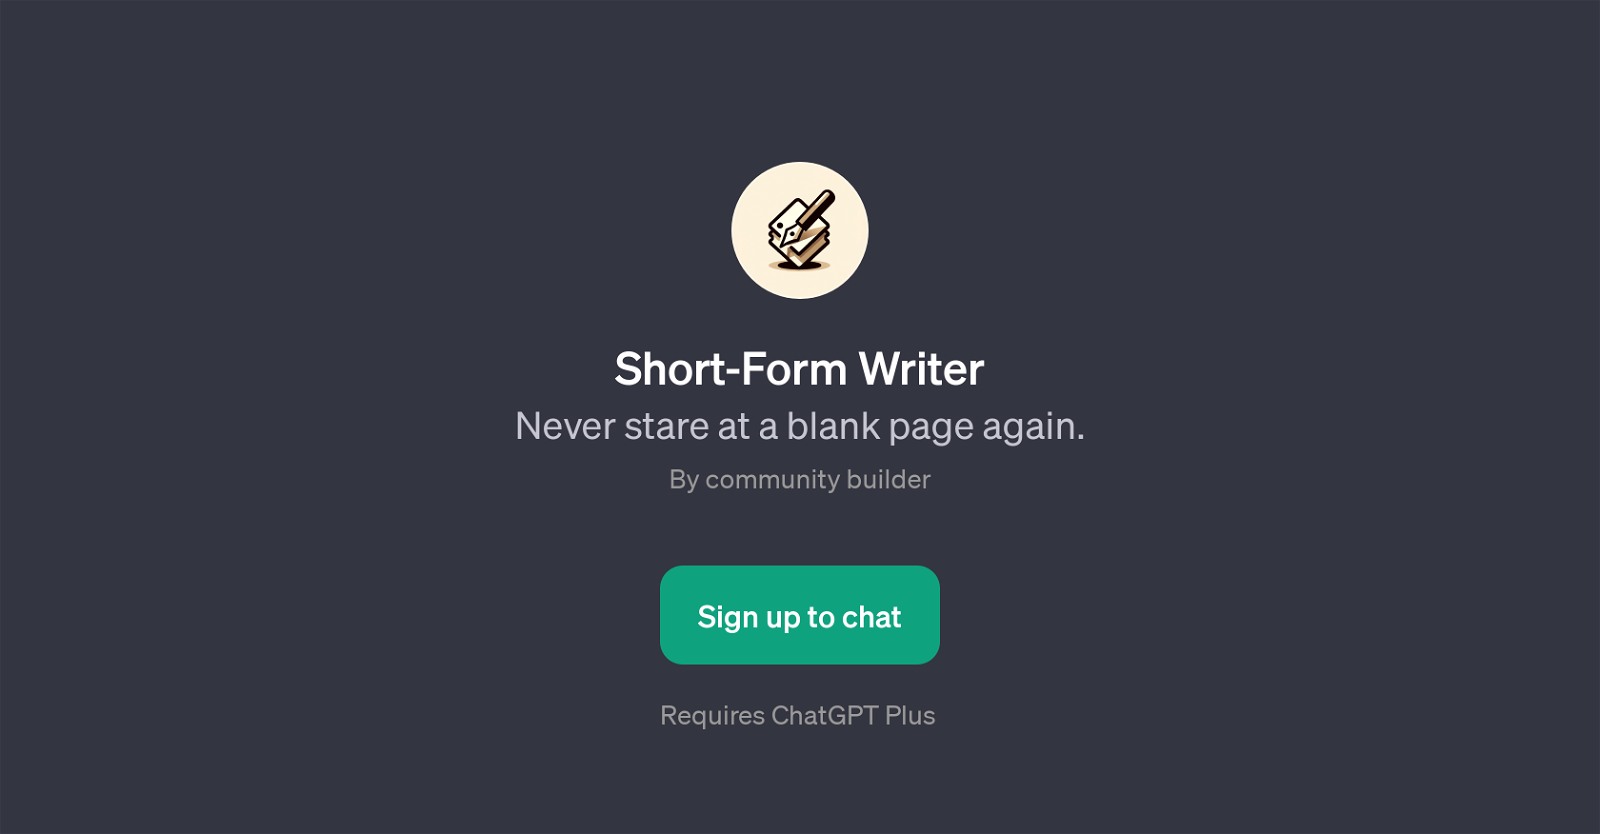 Short-Form Writer website